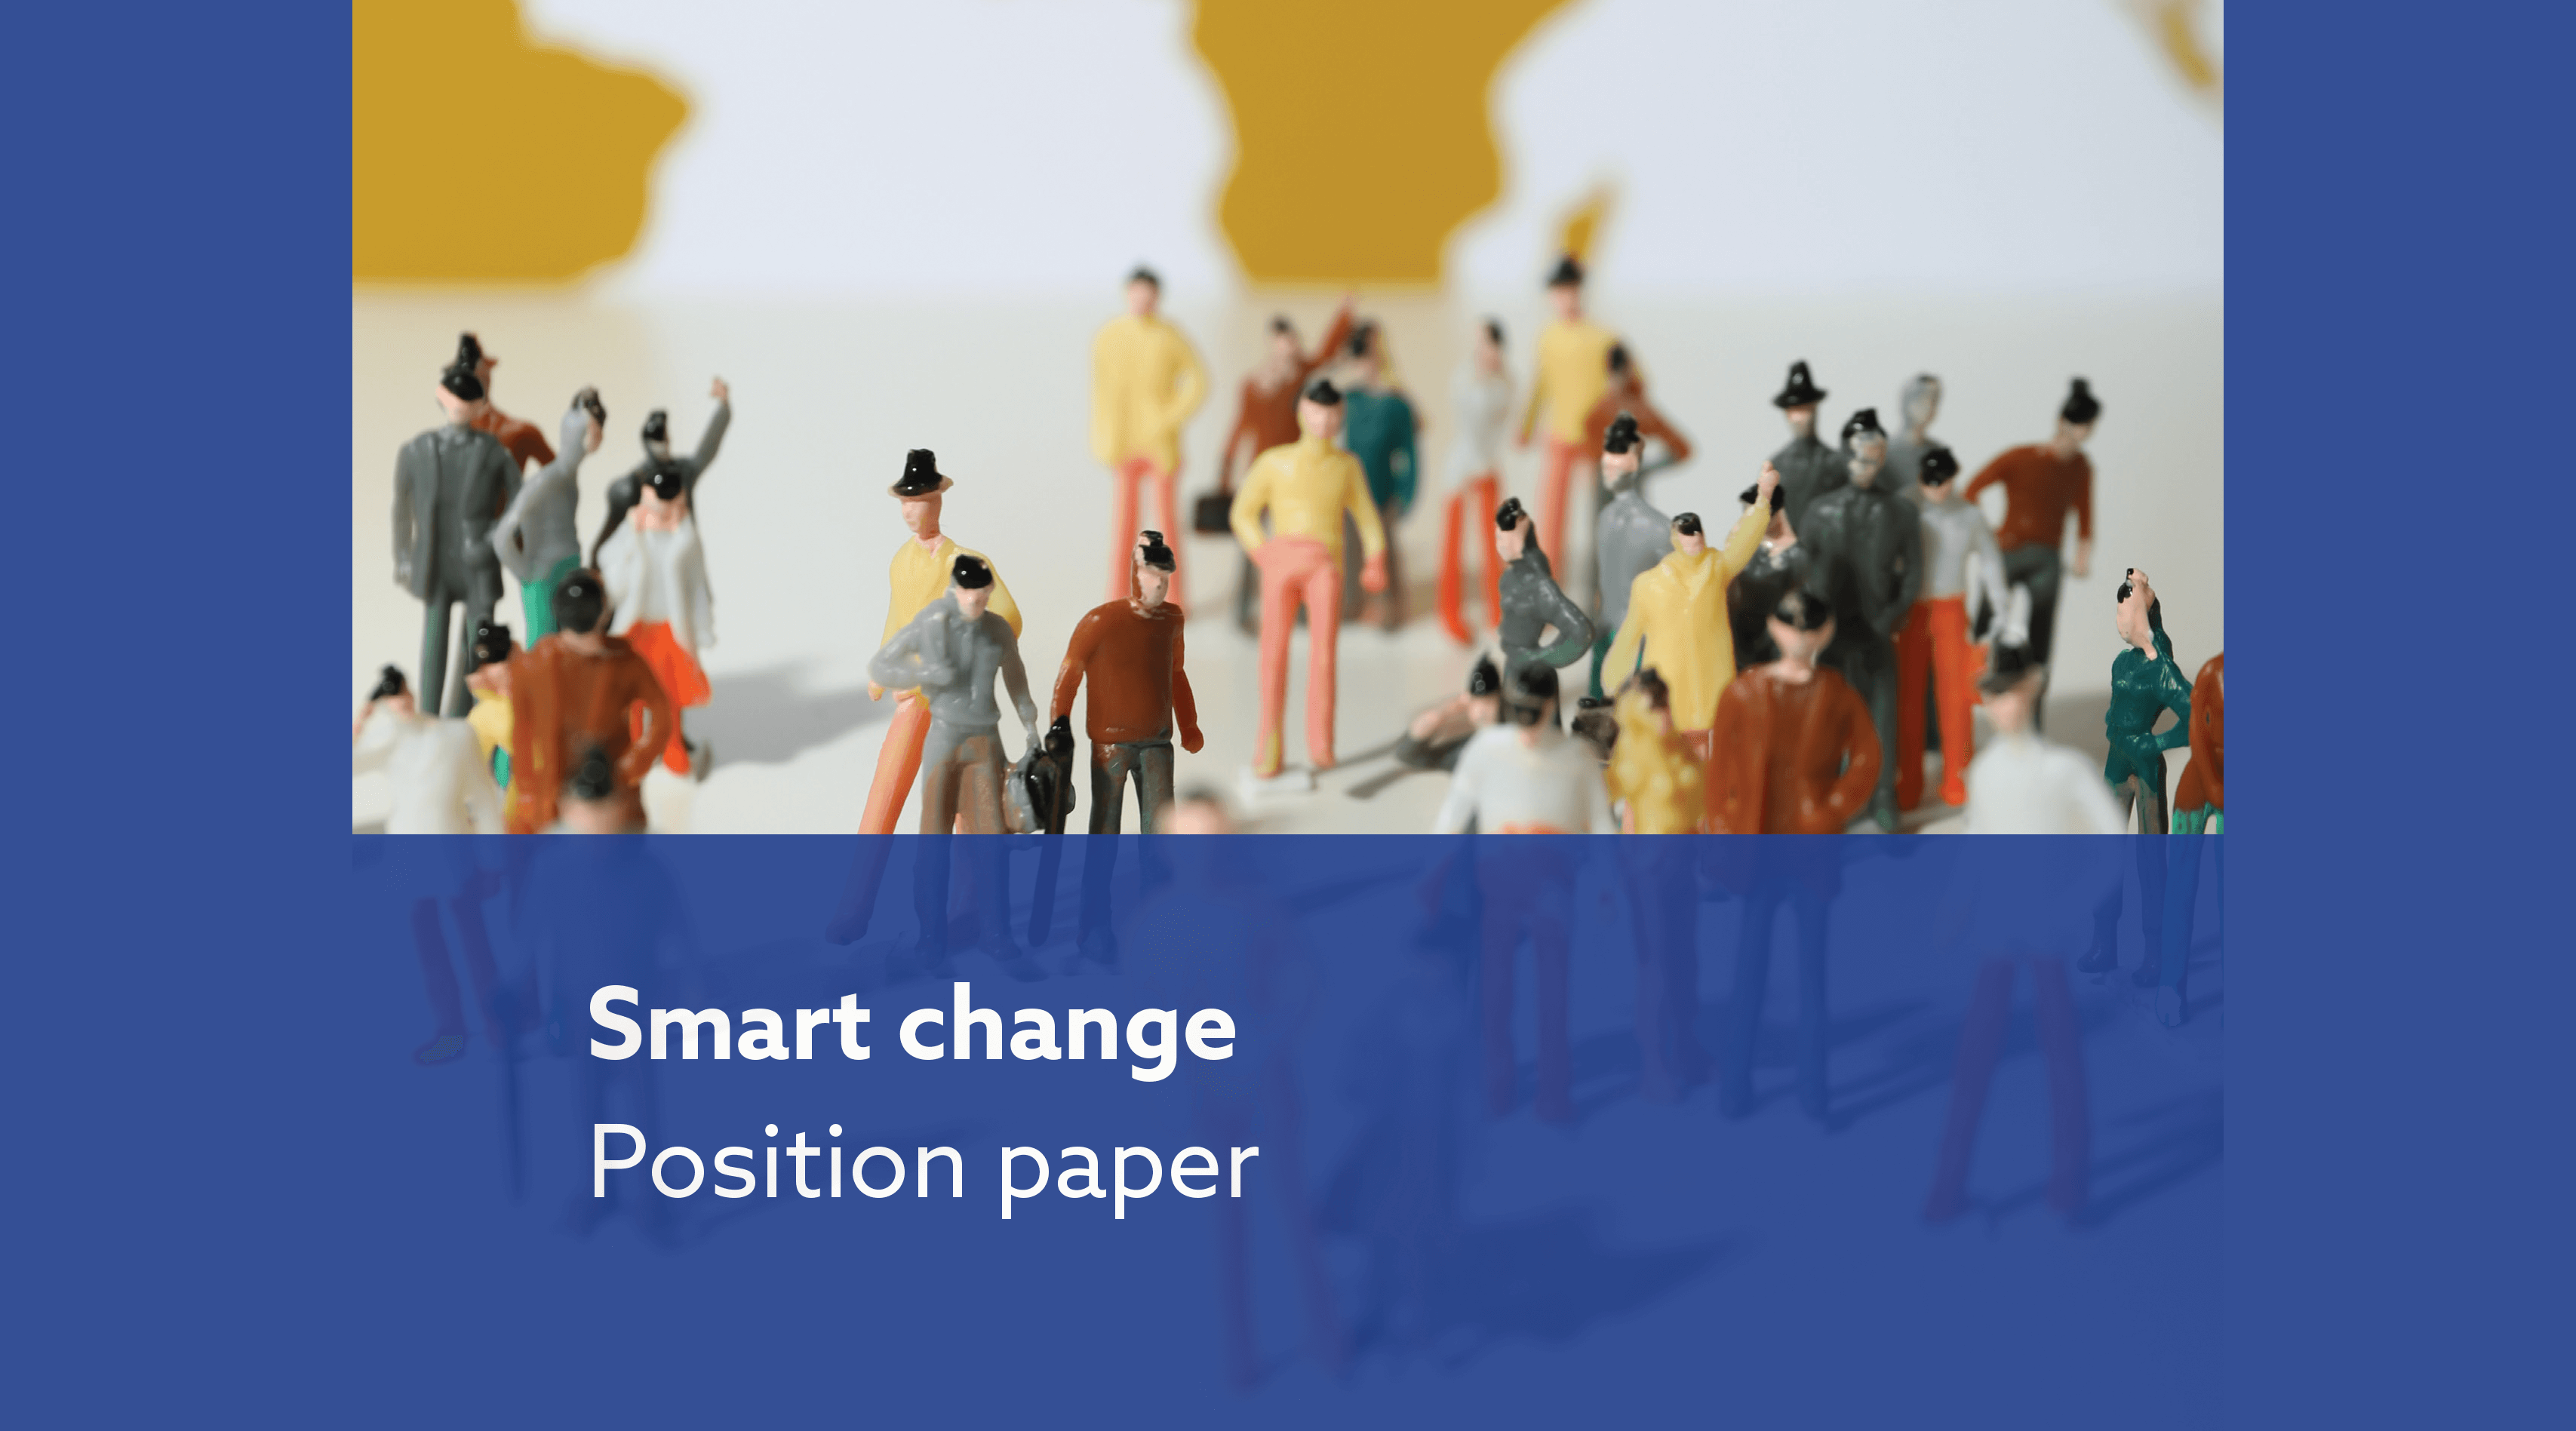 CEC European Managers - Position Paper on "Smart Change"